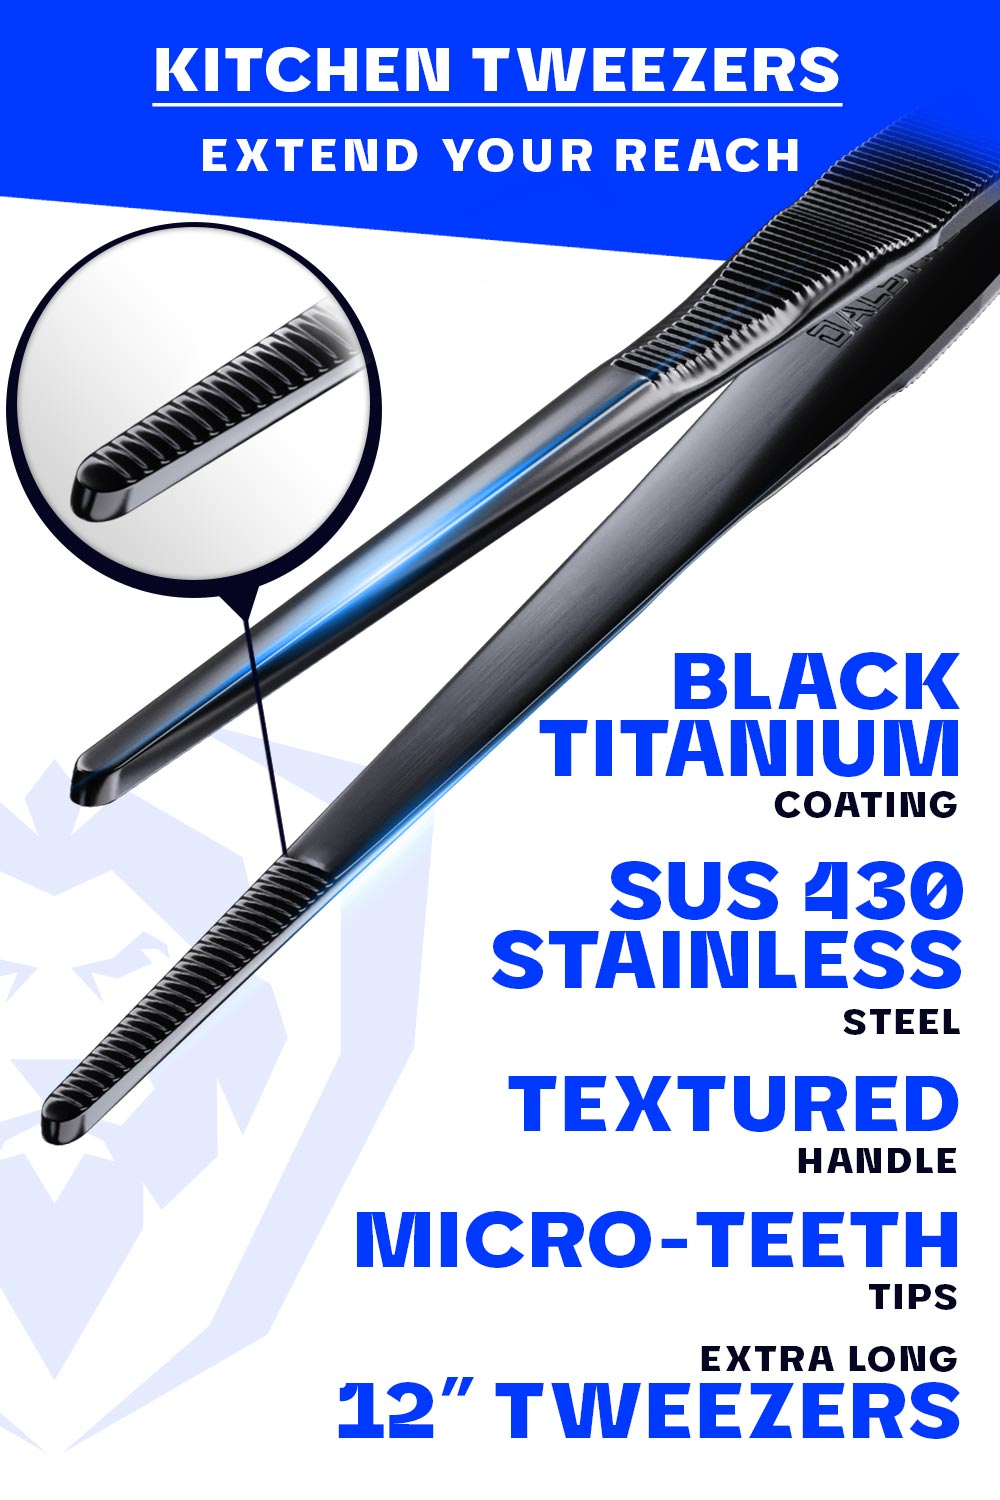 Dalstrong black titanium coated 12 inch professional tweezers featuring it's extra long stanless steel tweezers.